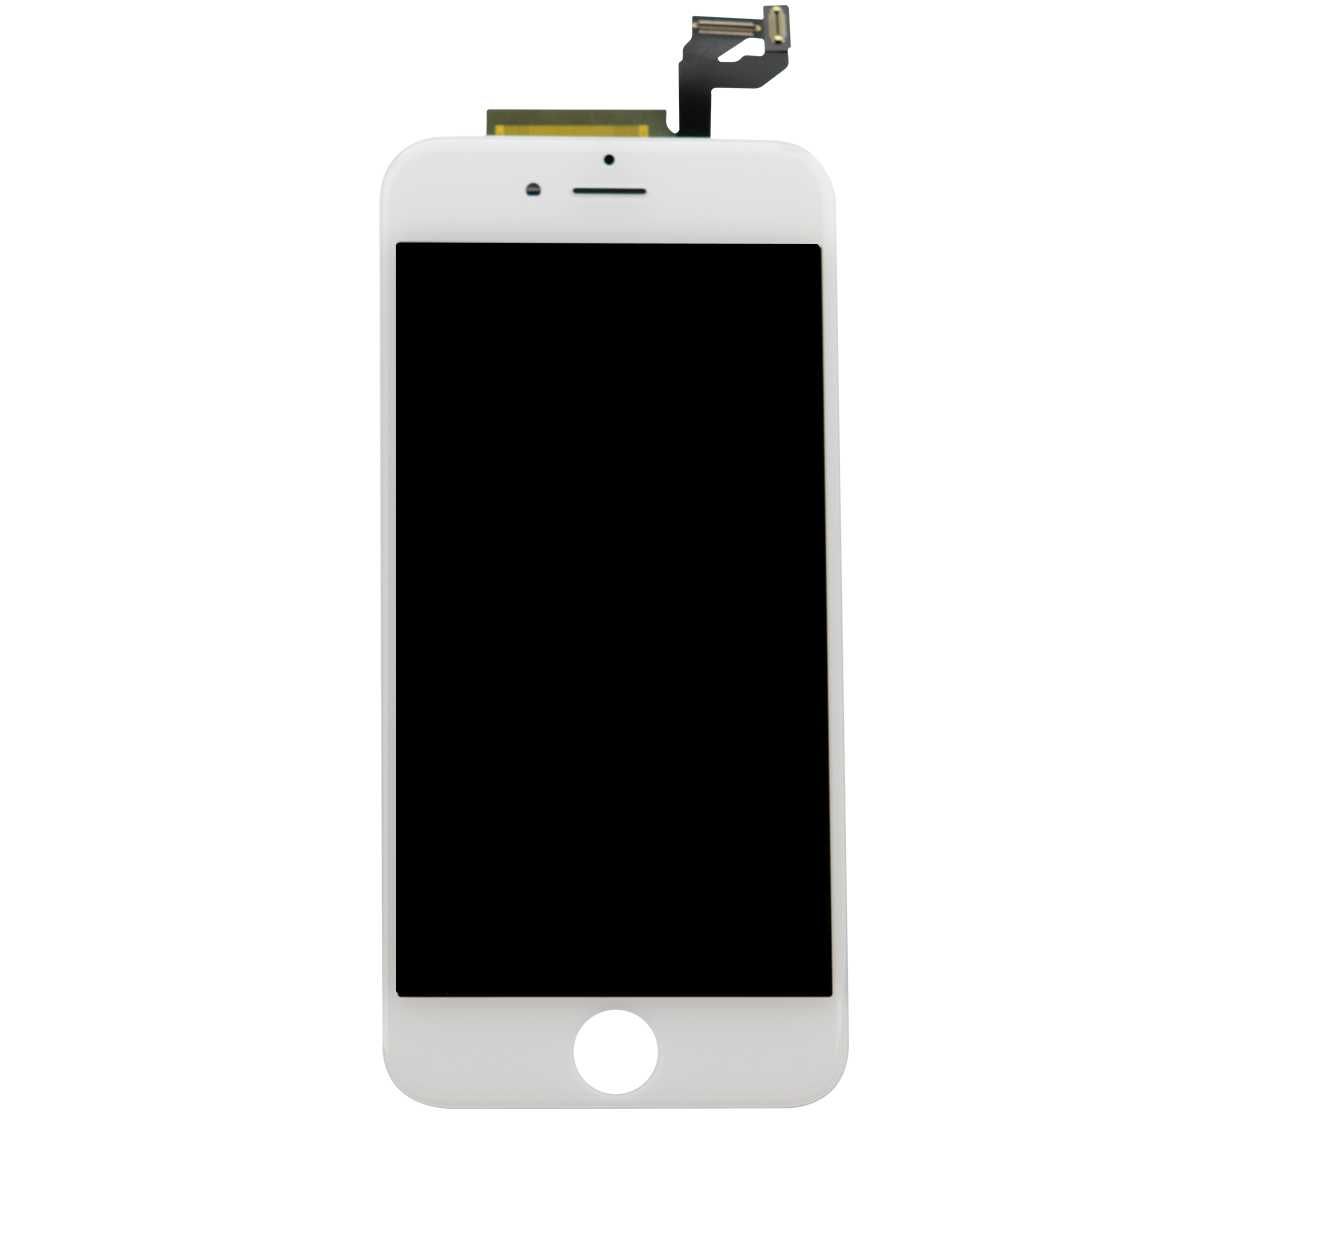  Display LCD iPhone 6s Plus Branco  NOVO + Ferramentas